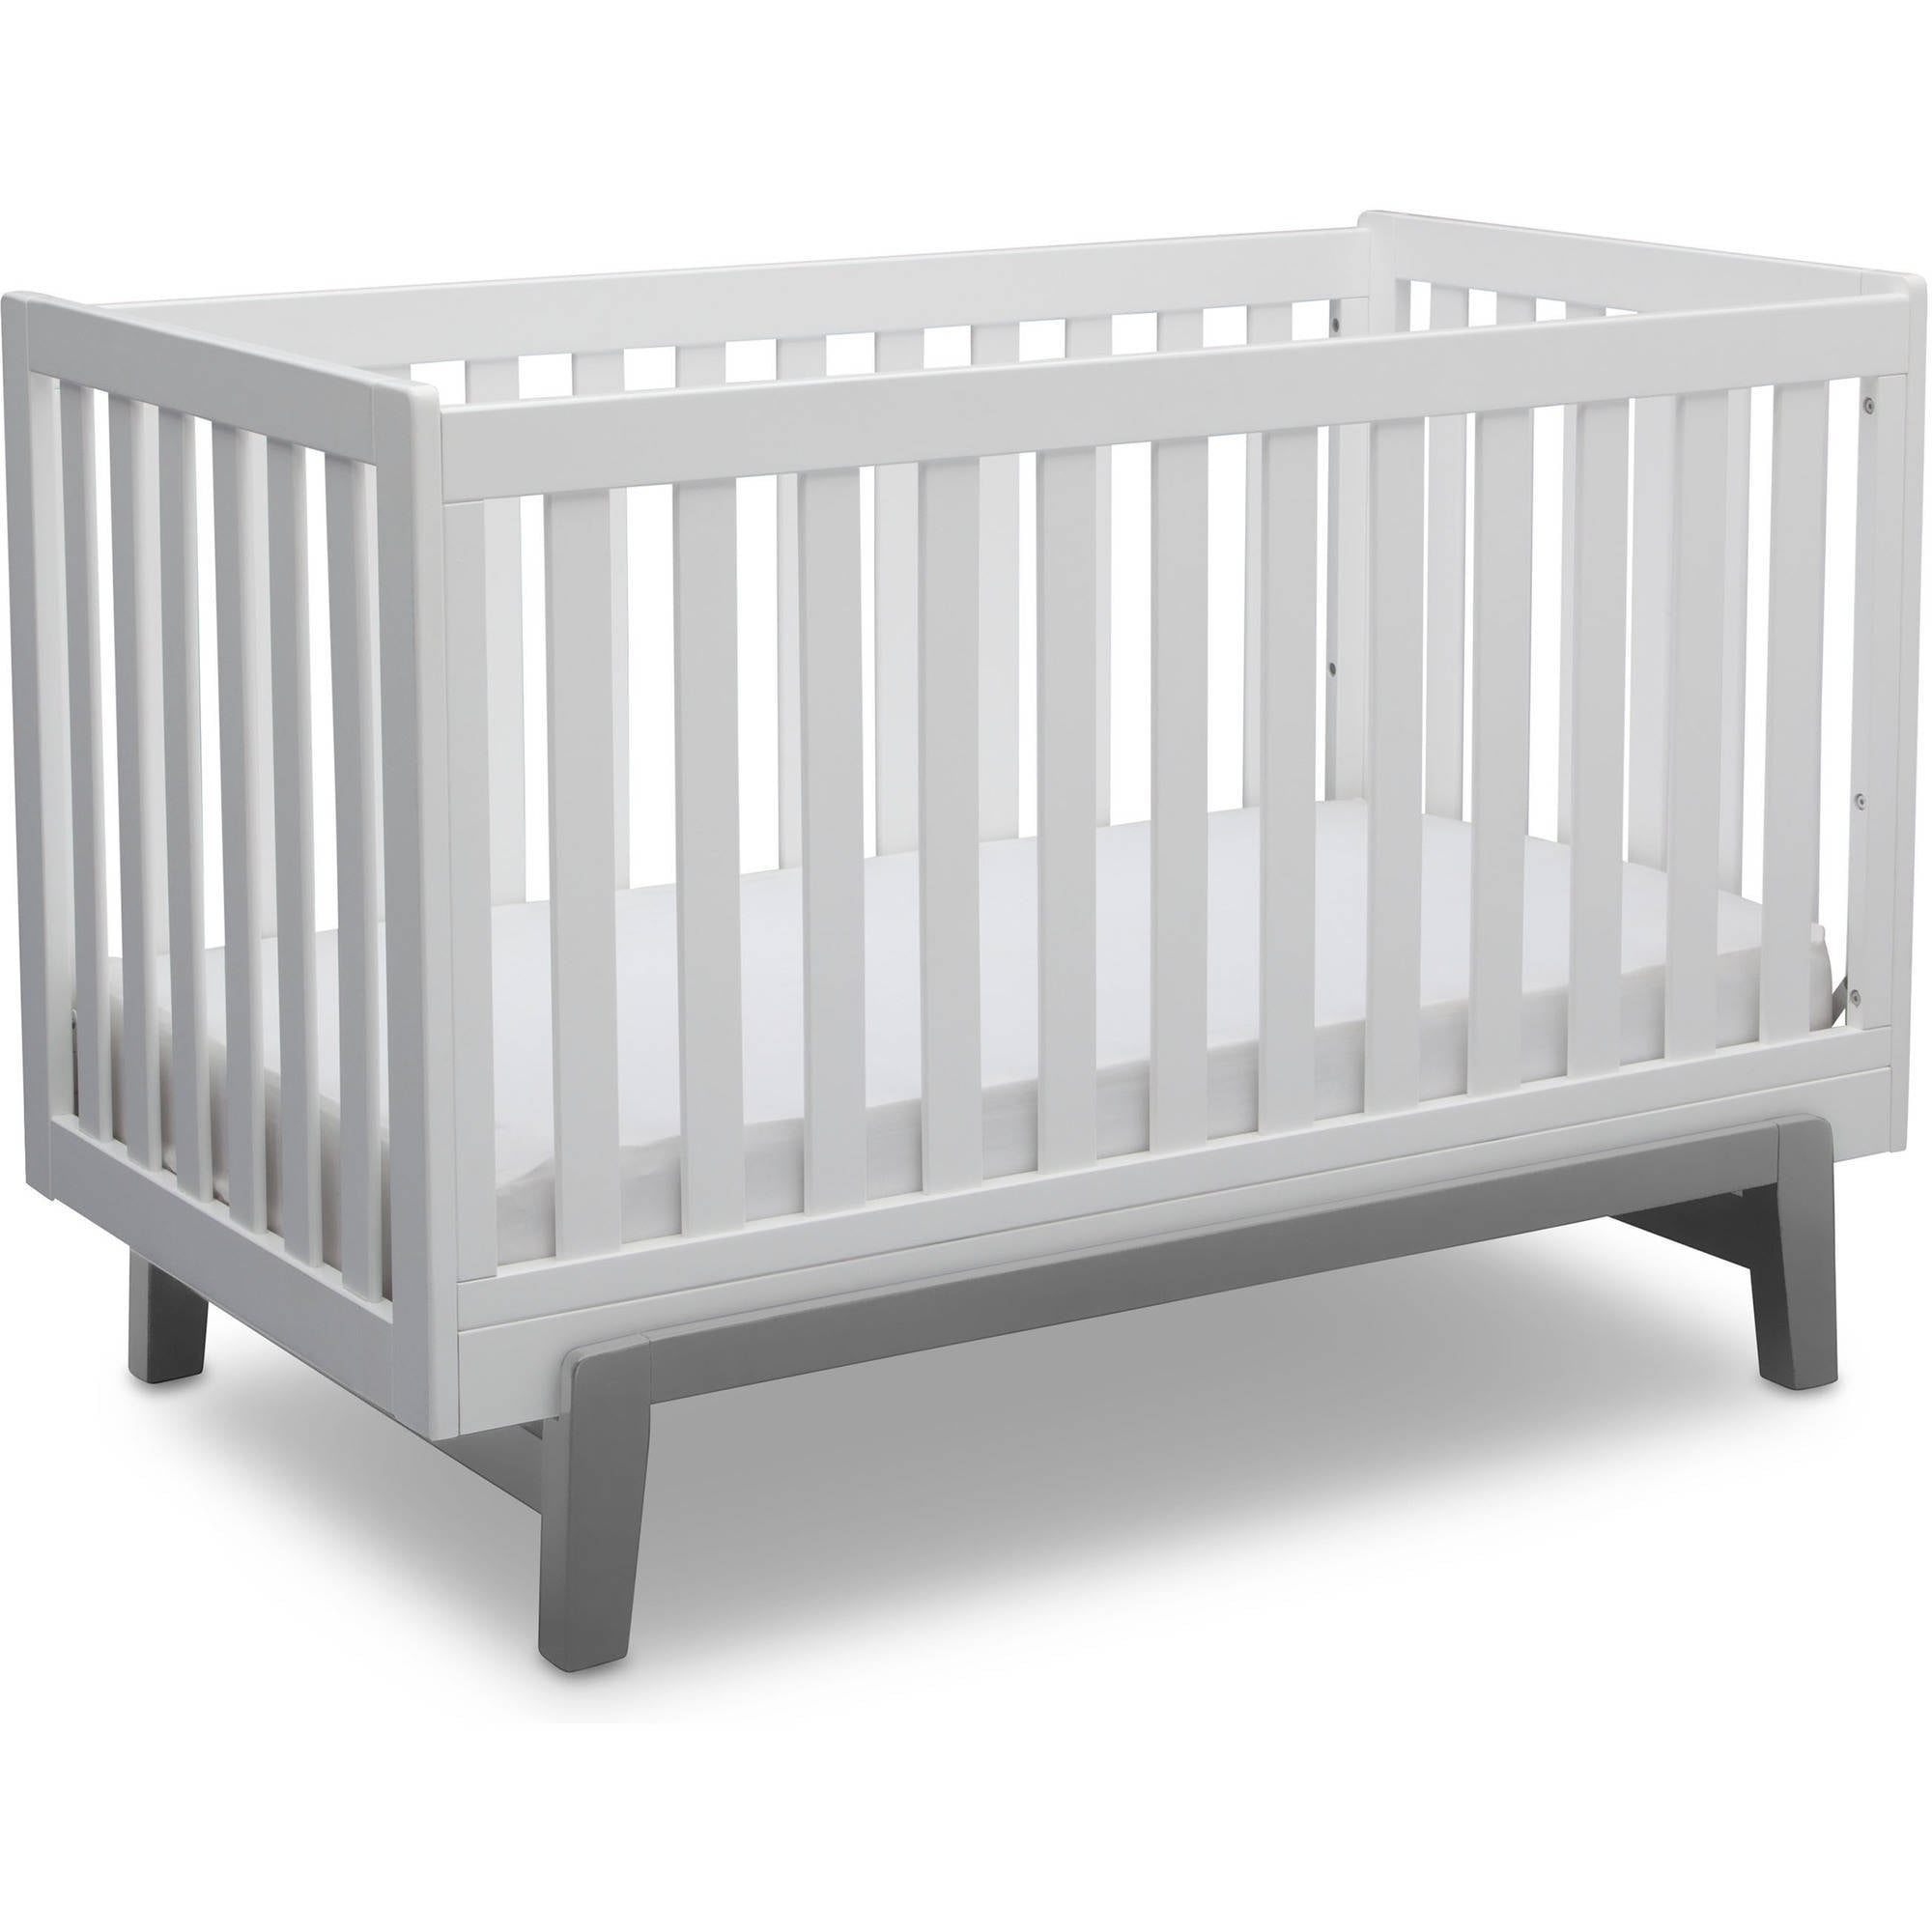 white modern crib